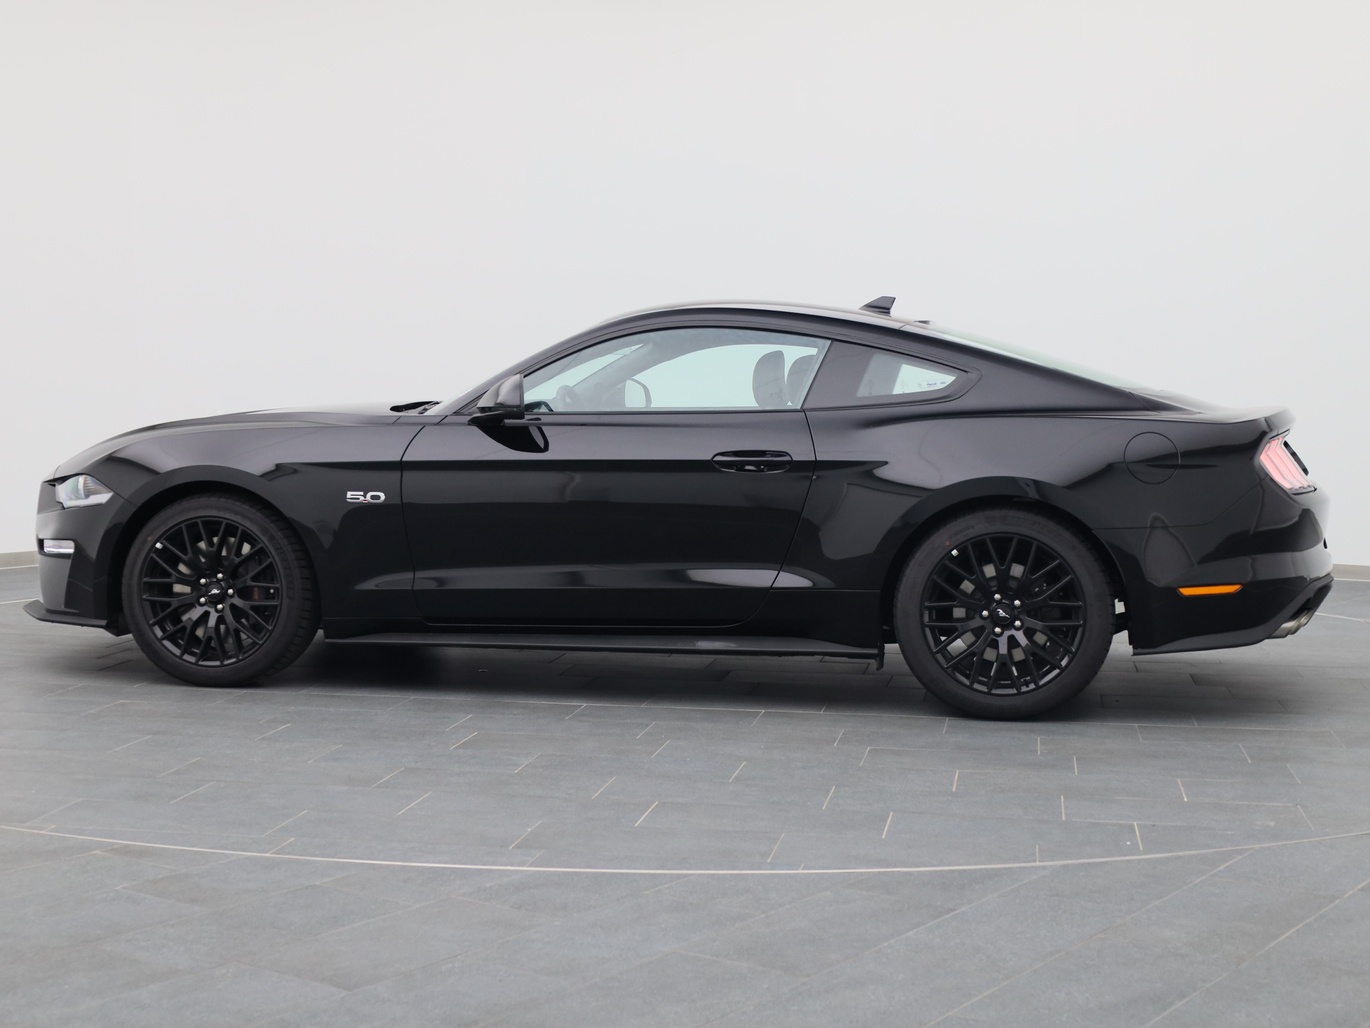  Ford Mustang GT Coupé V8 450PS / Premium 2 in Iridium Schwarz von Links